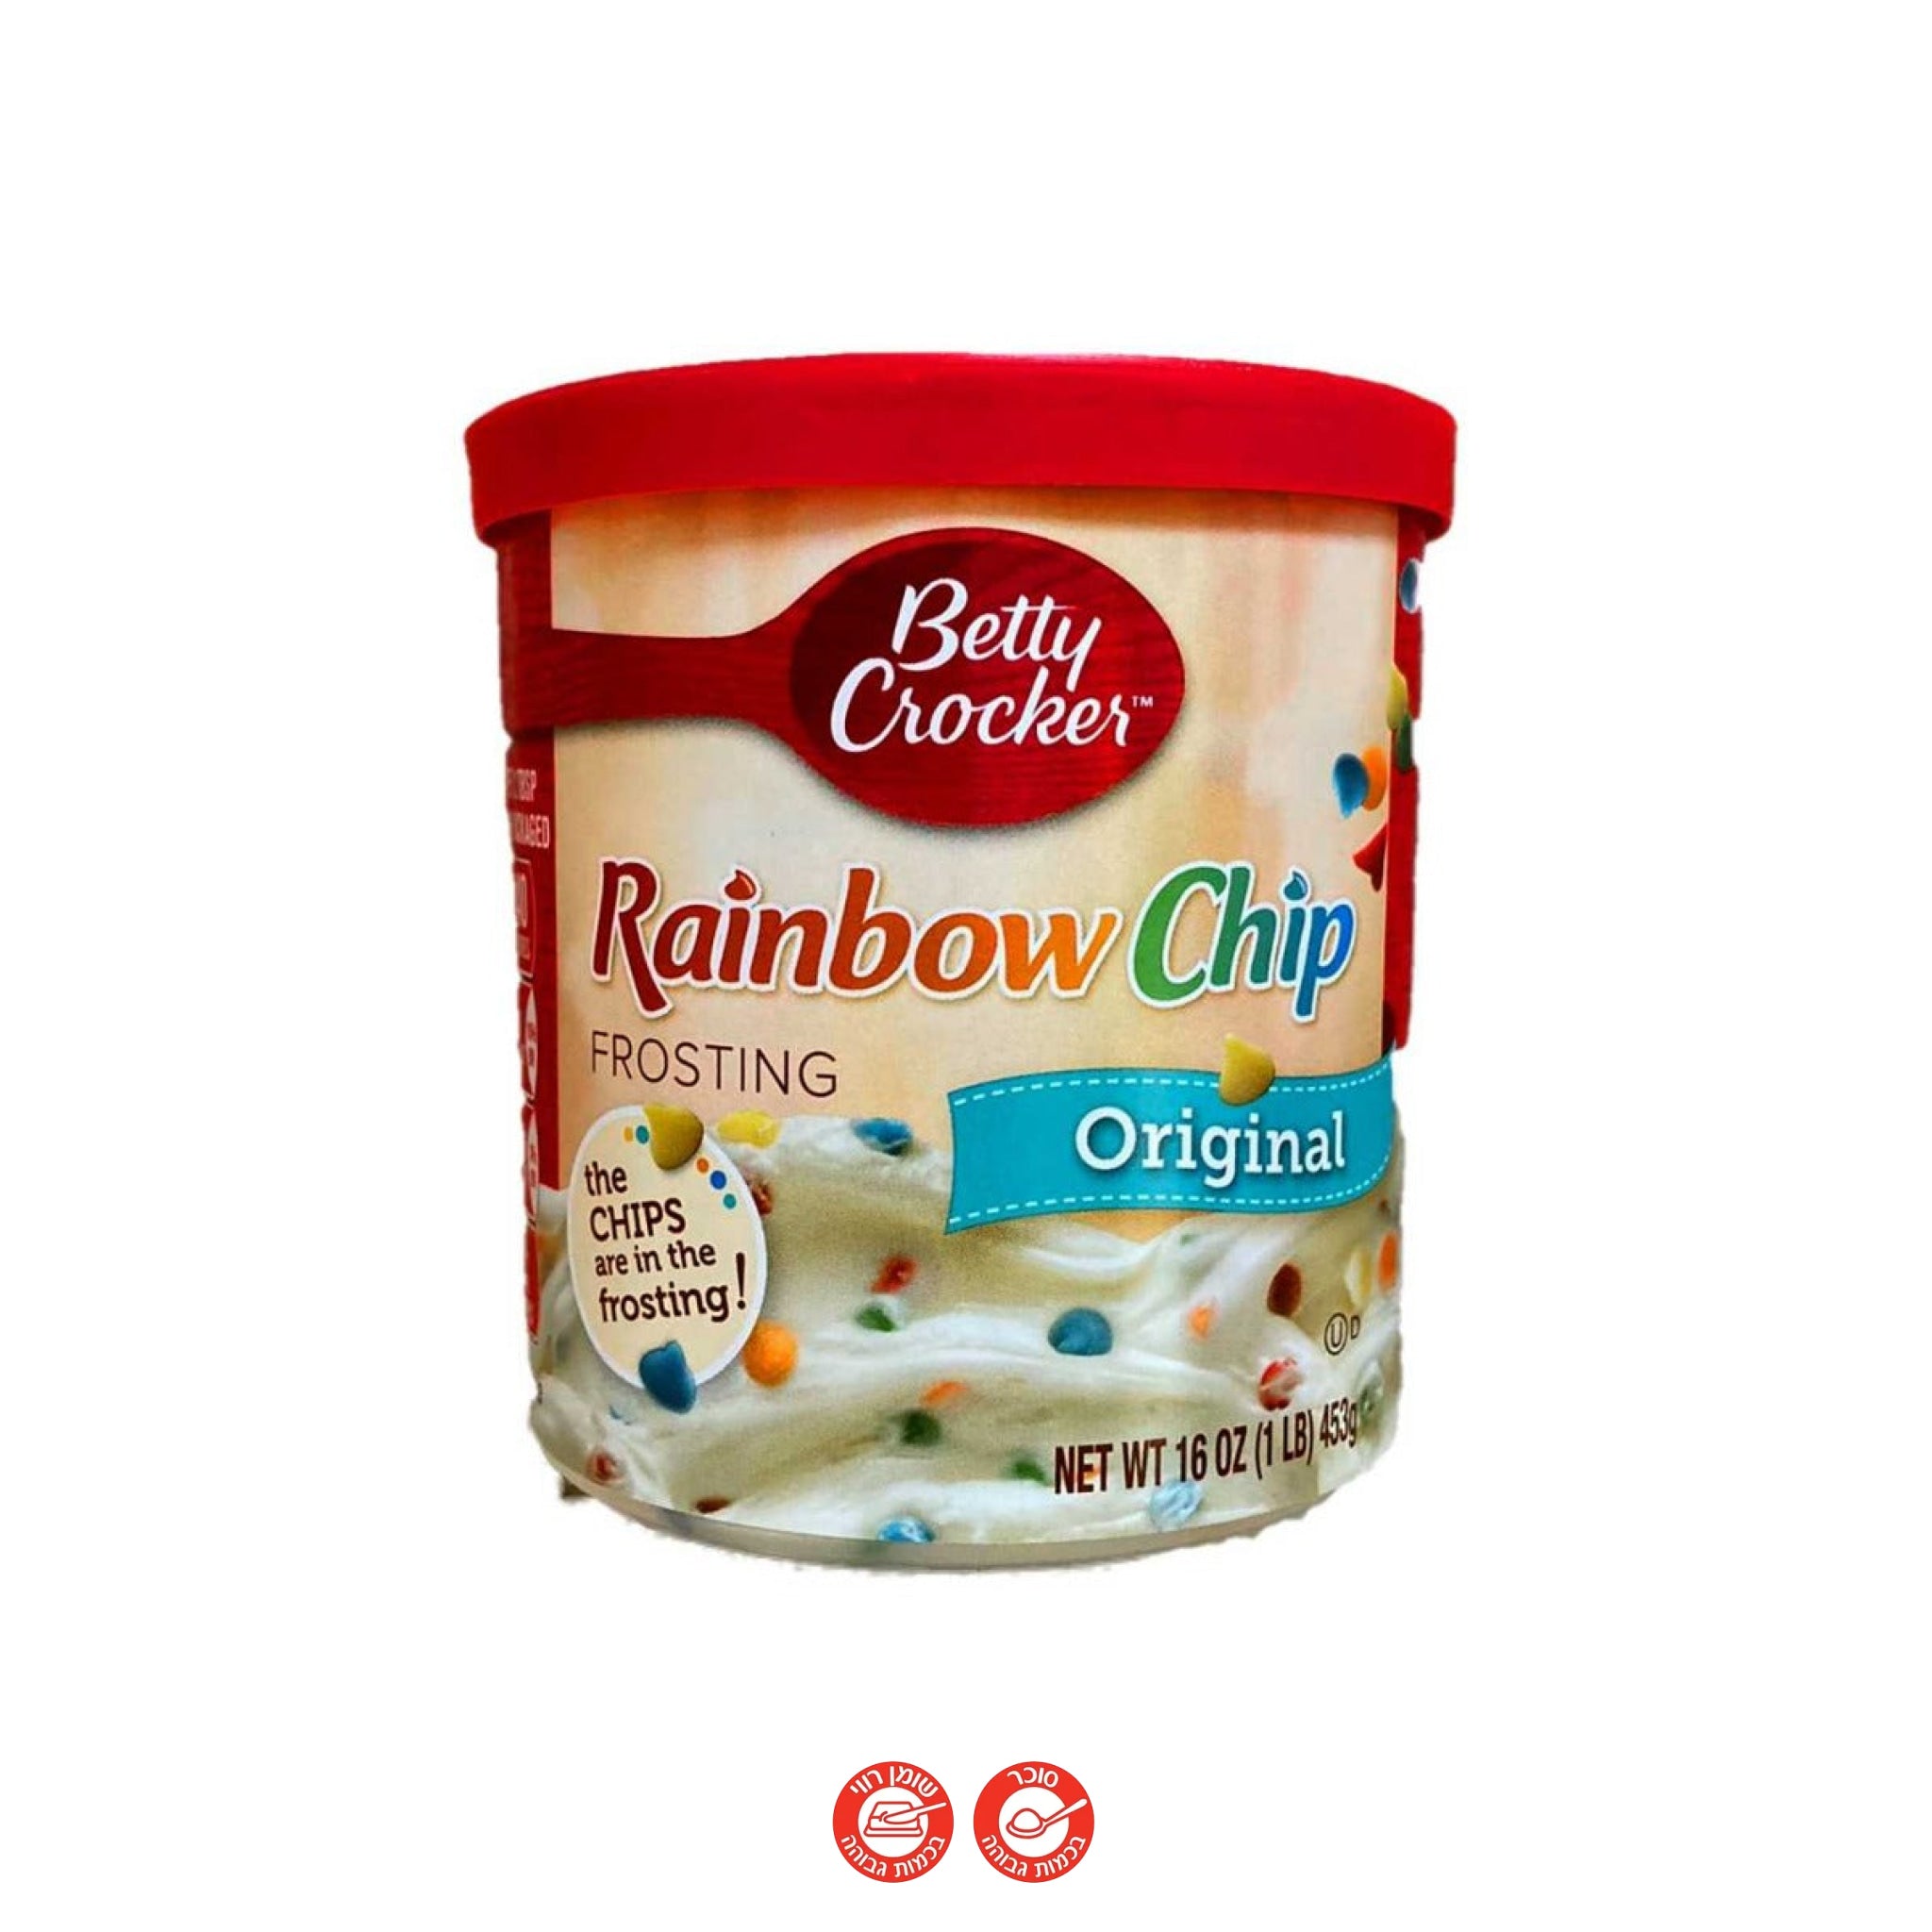 Betty Crocker Rainbow Chip Frosting - ציפוי לעוגה עם סוכריות צבעוניות - טעימים